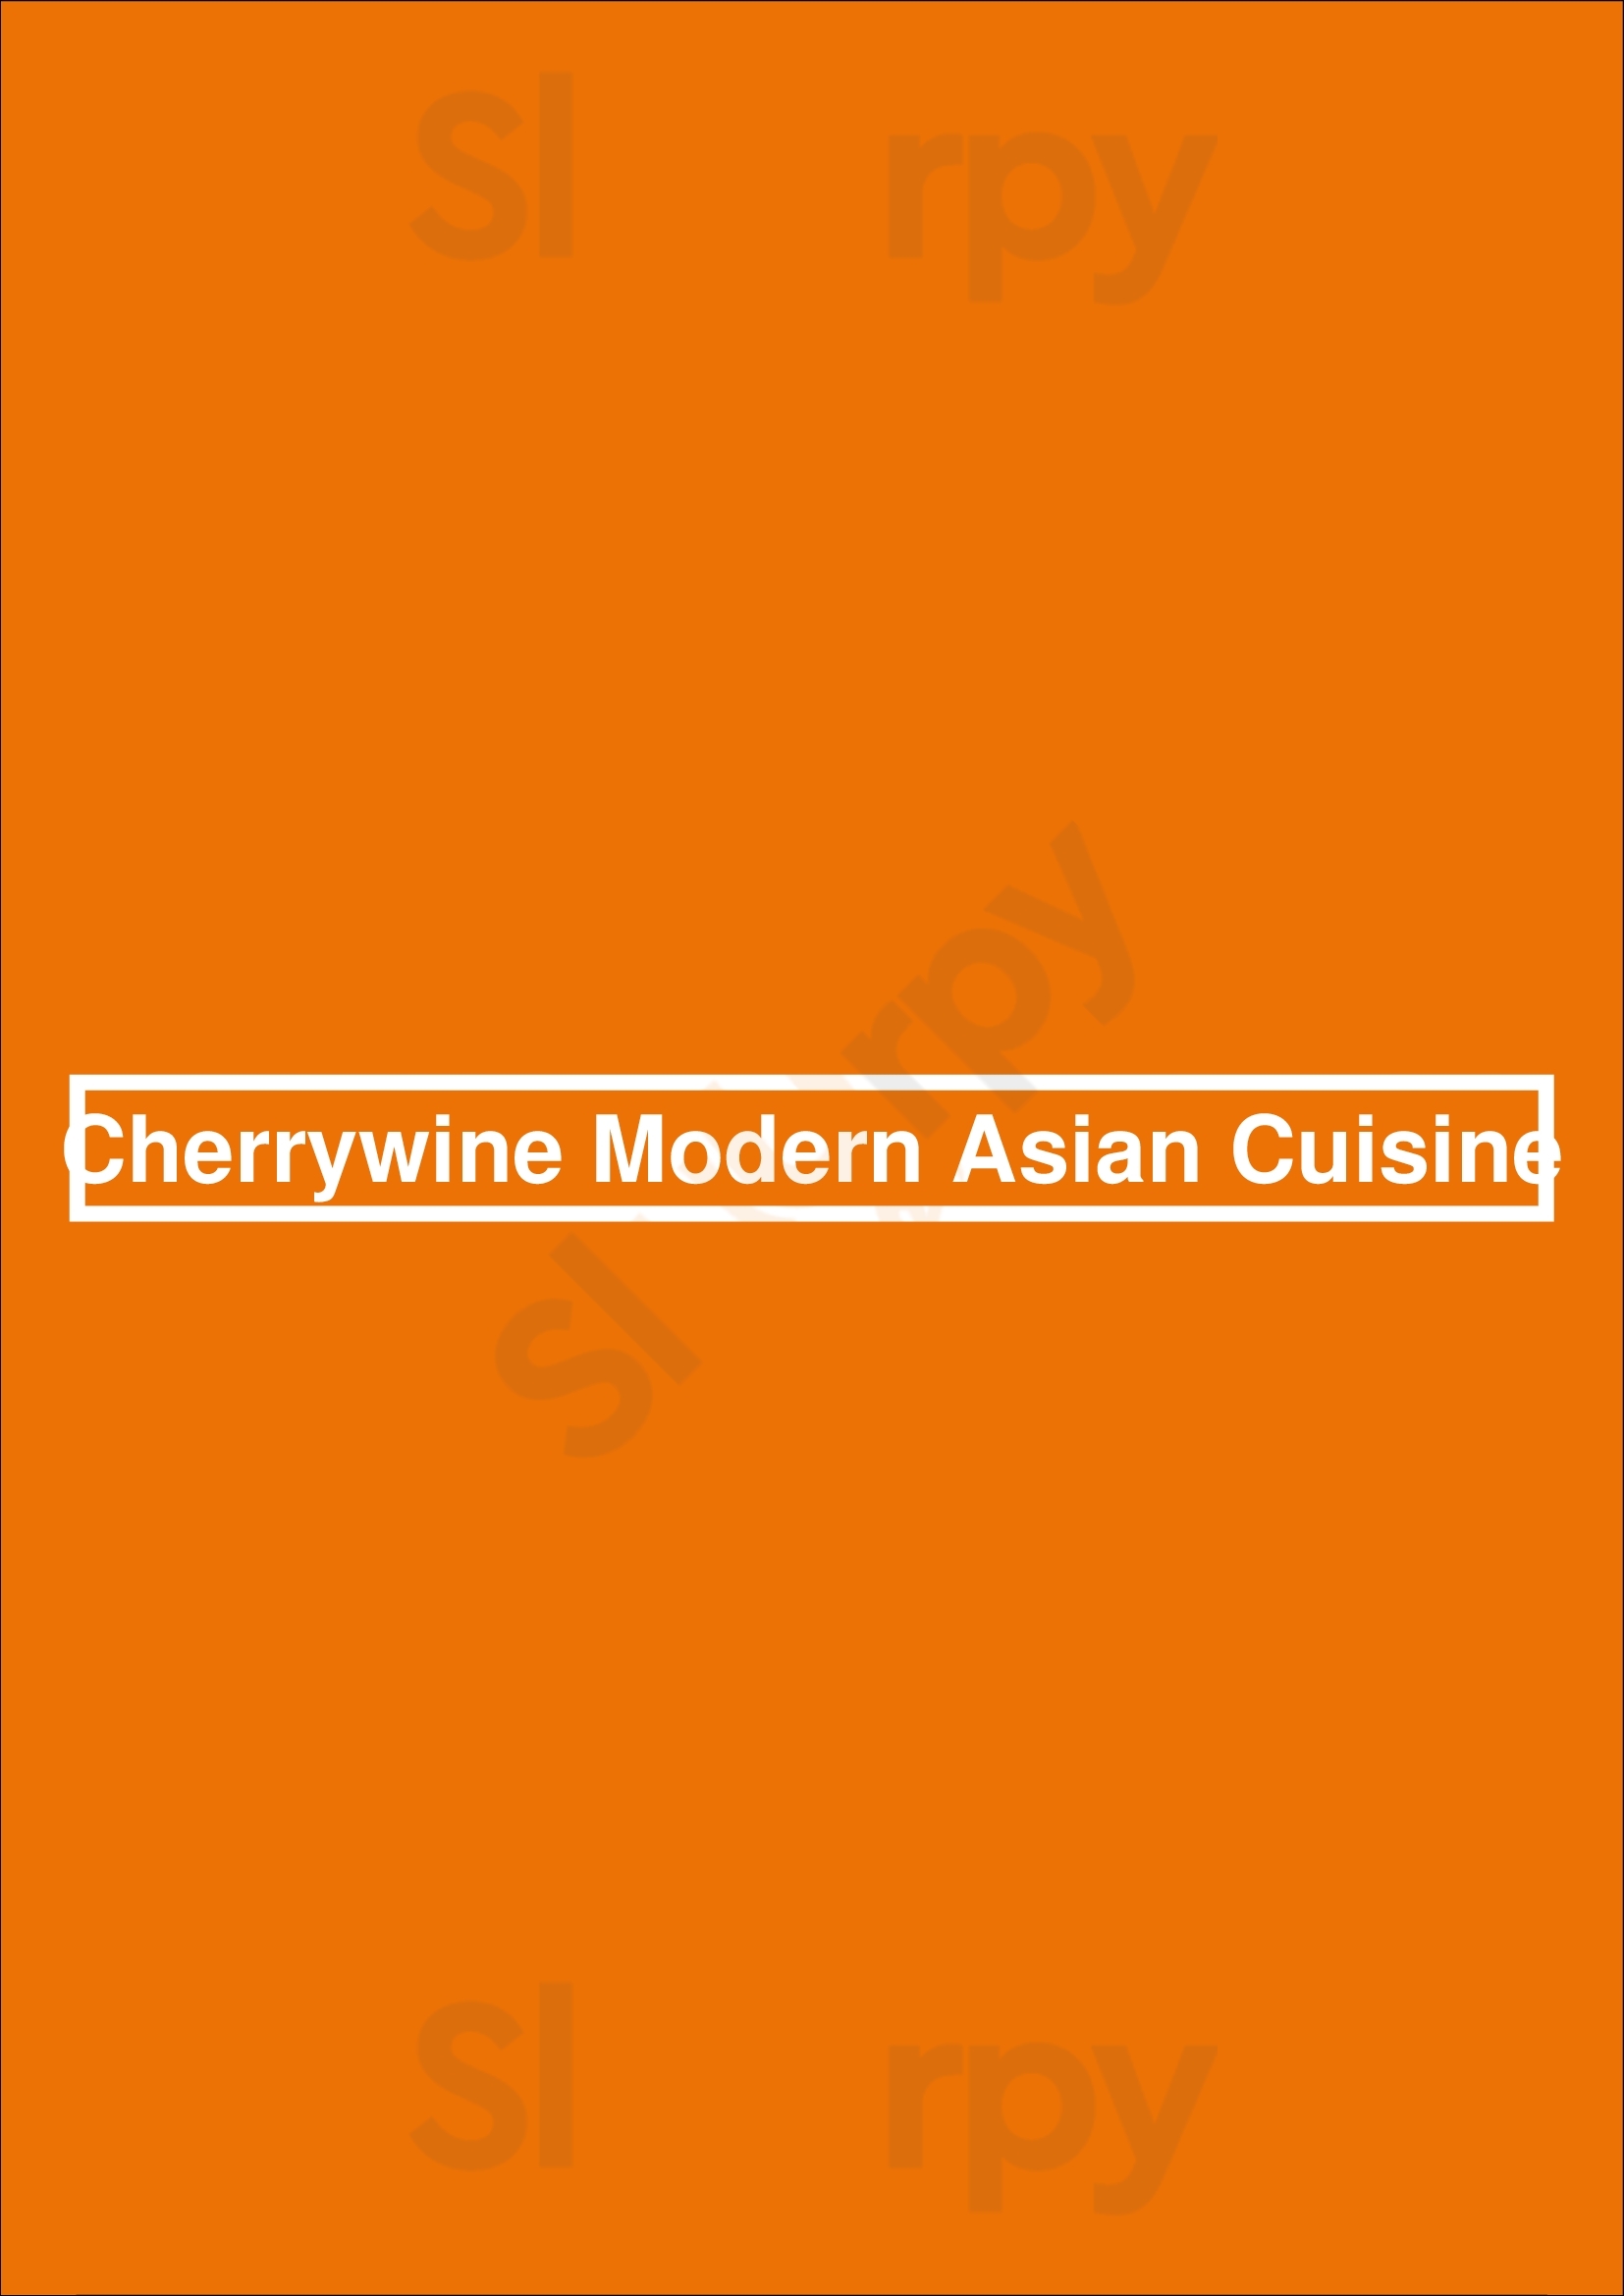 Cherry Wine Modern Asian Cuisine La Jolla Menu - 1